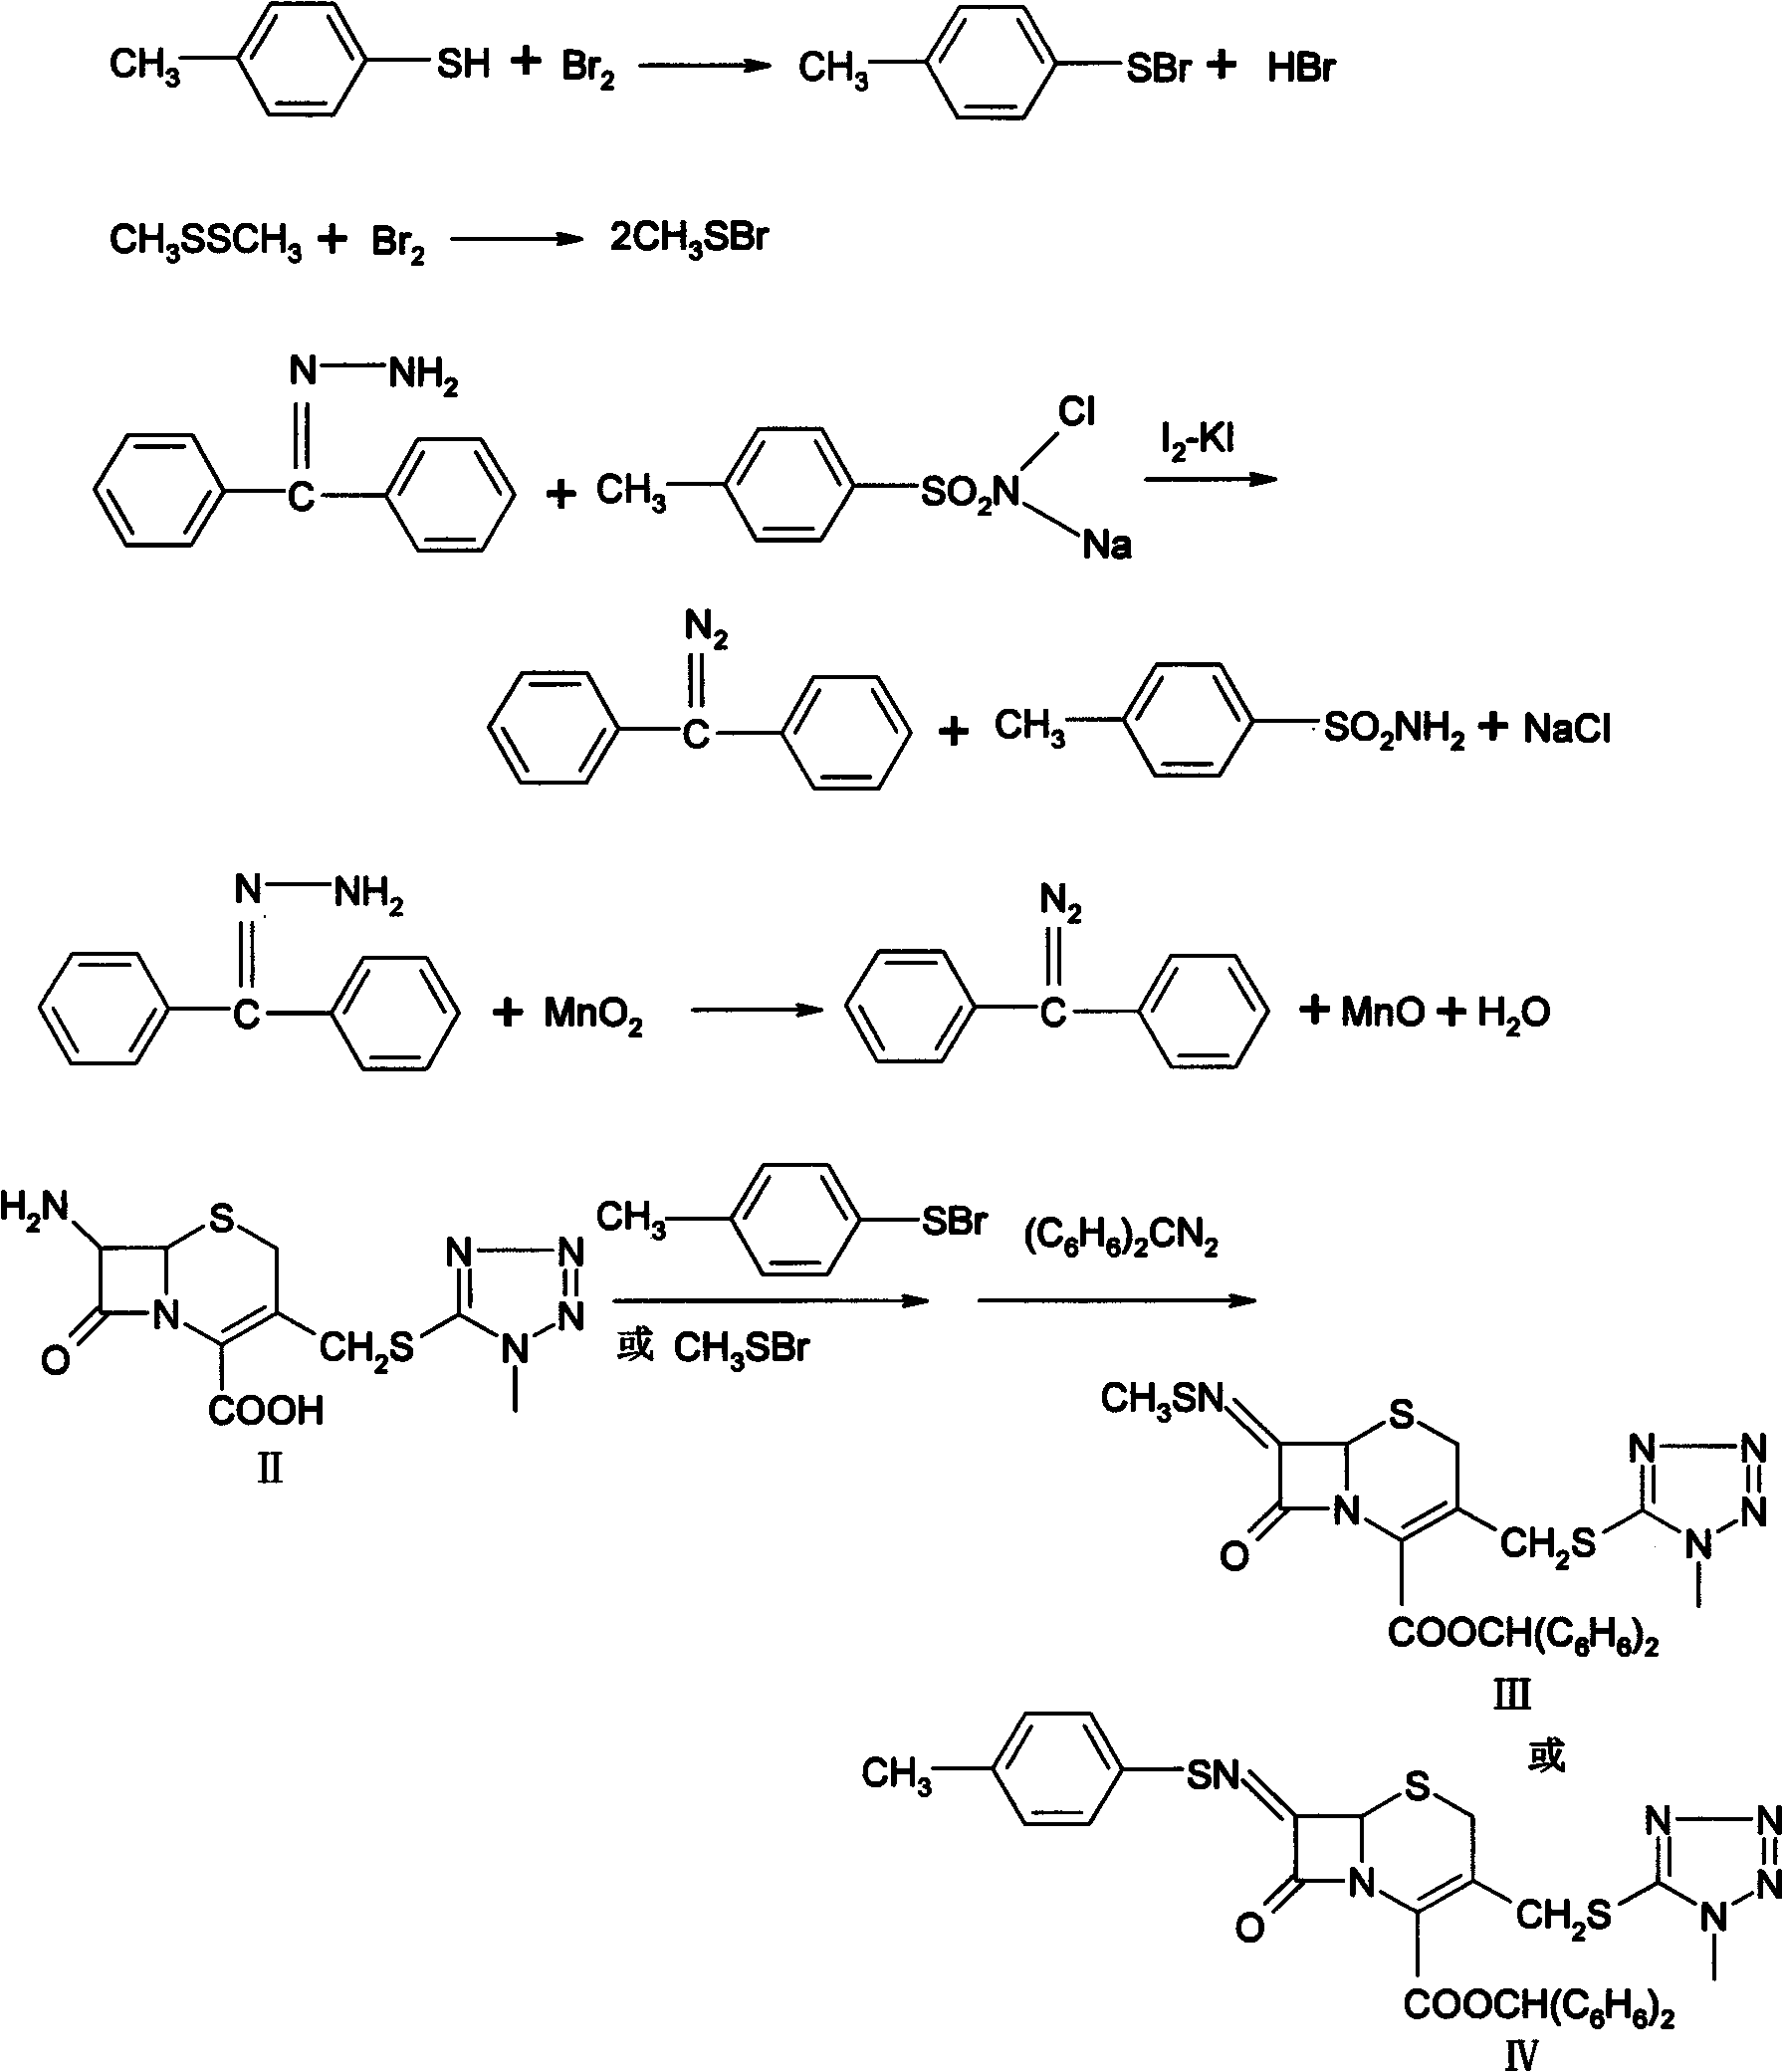 Process method for preparing methoxycephems intermediate 7-MAC (7-methoxycephalosporin)